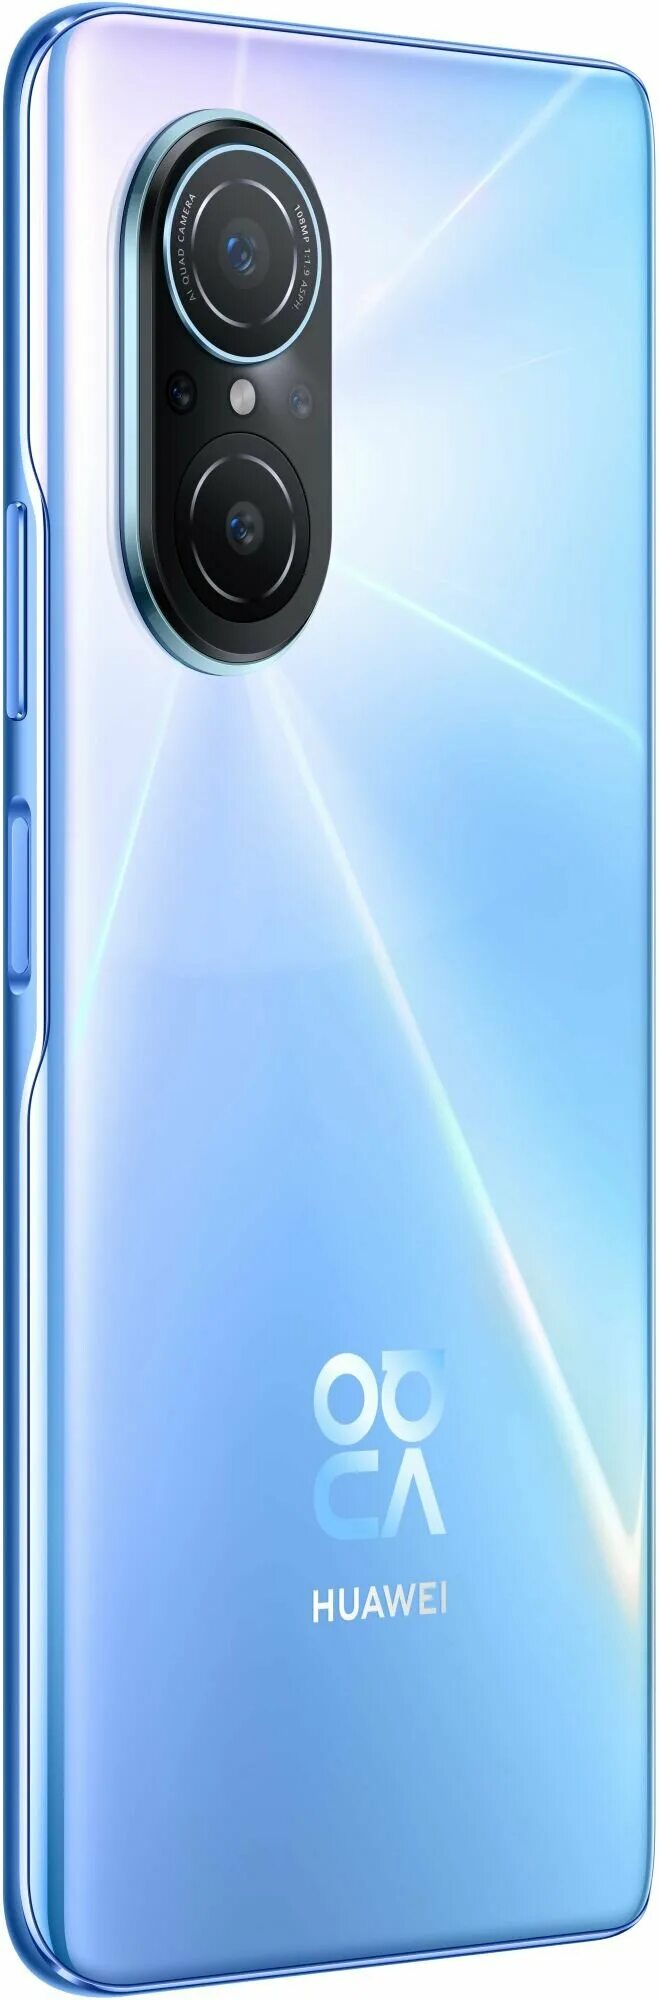 Хуавей нова 9се. Huawei Nova 9 se 128gb. Смартфон Huawei Nova 9 se 8/128gb. Huawei Nova 9 8/128gb. Huawei Nova 9 se 8/128gb Blue Crystal.